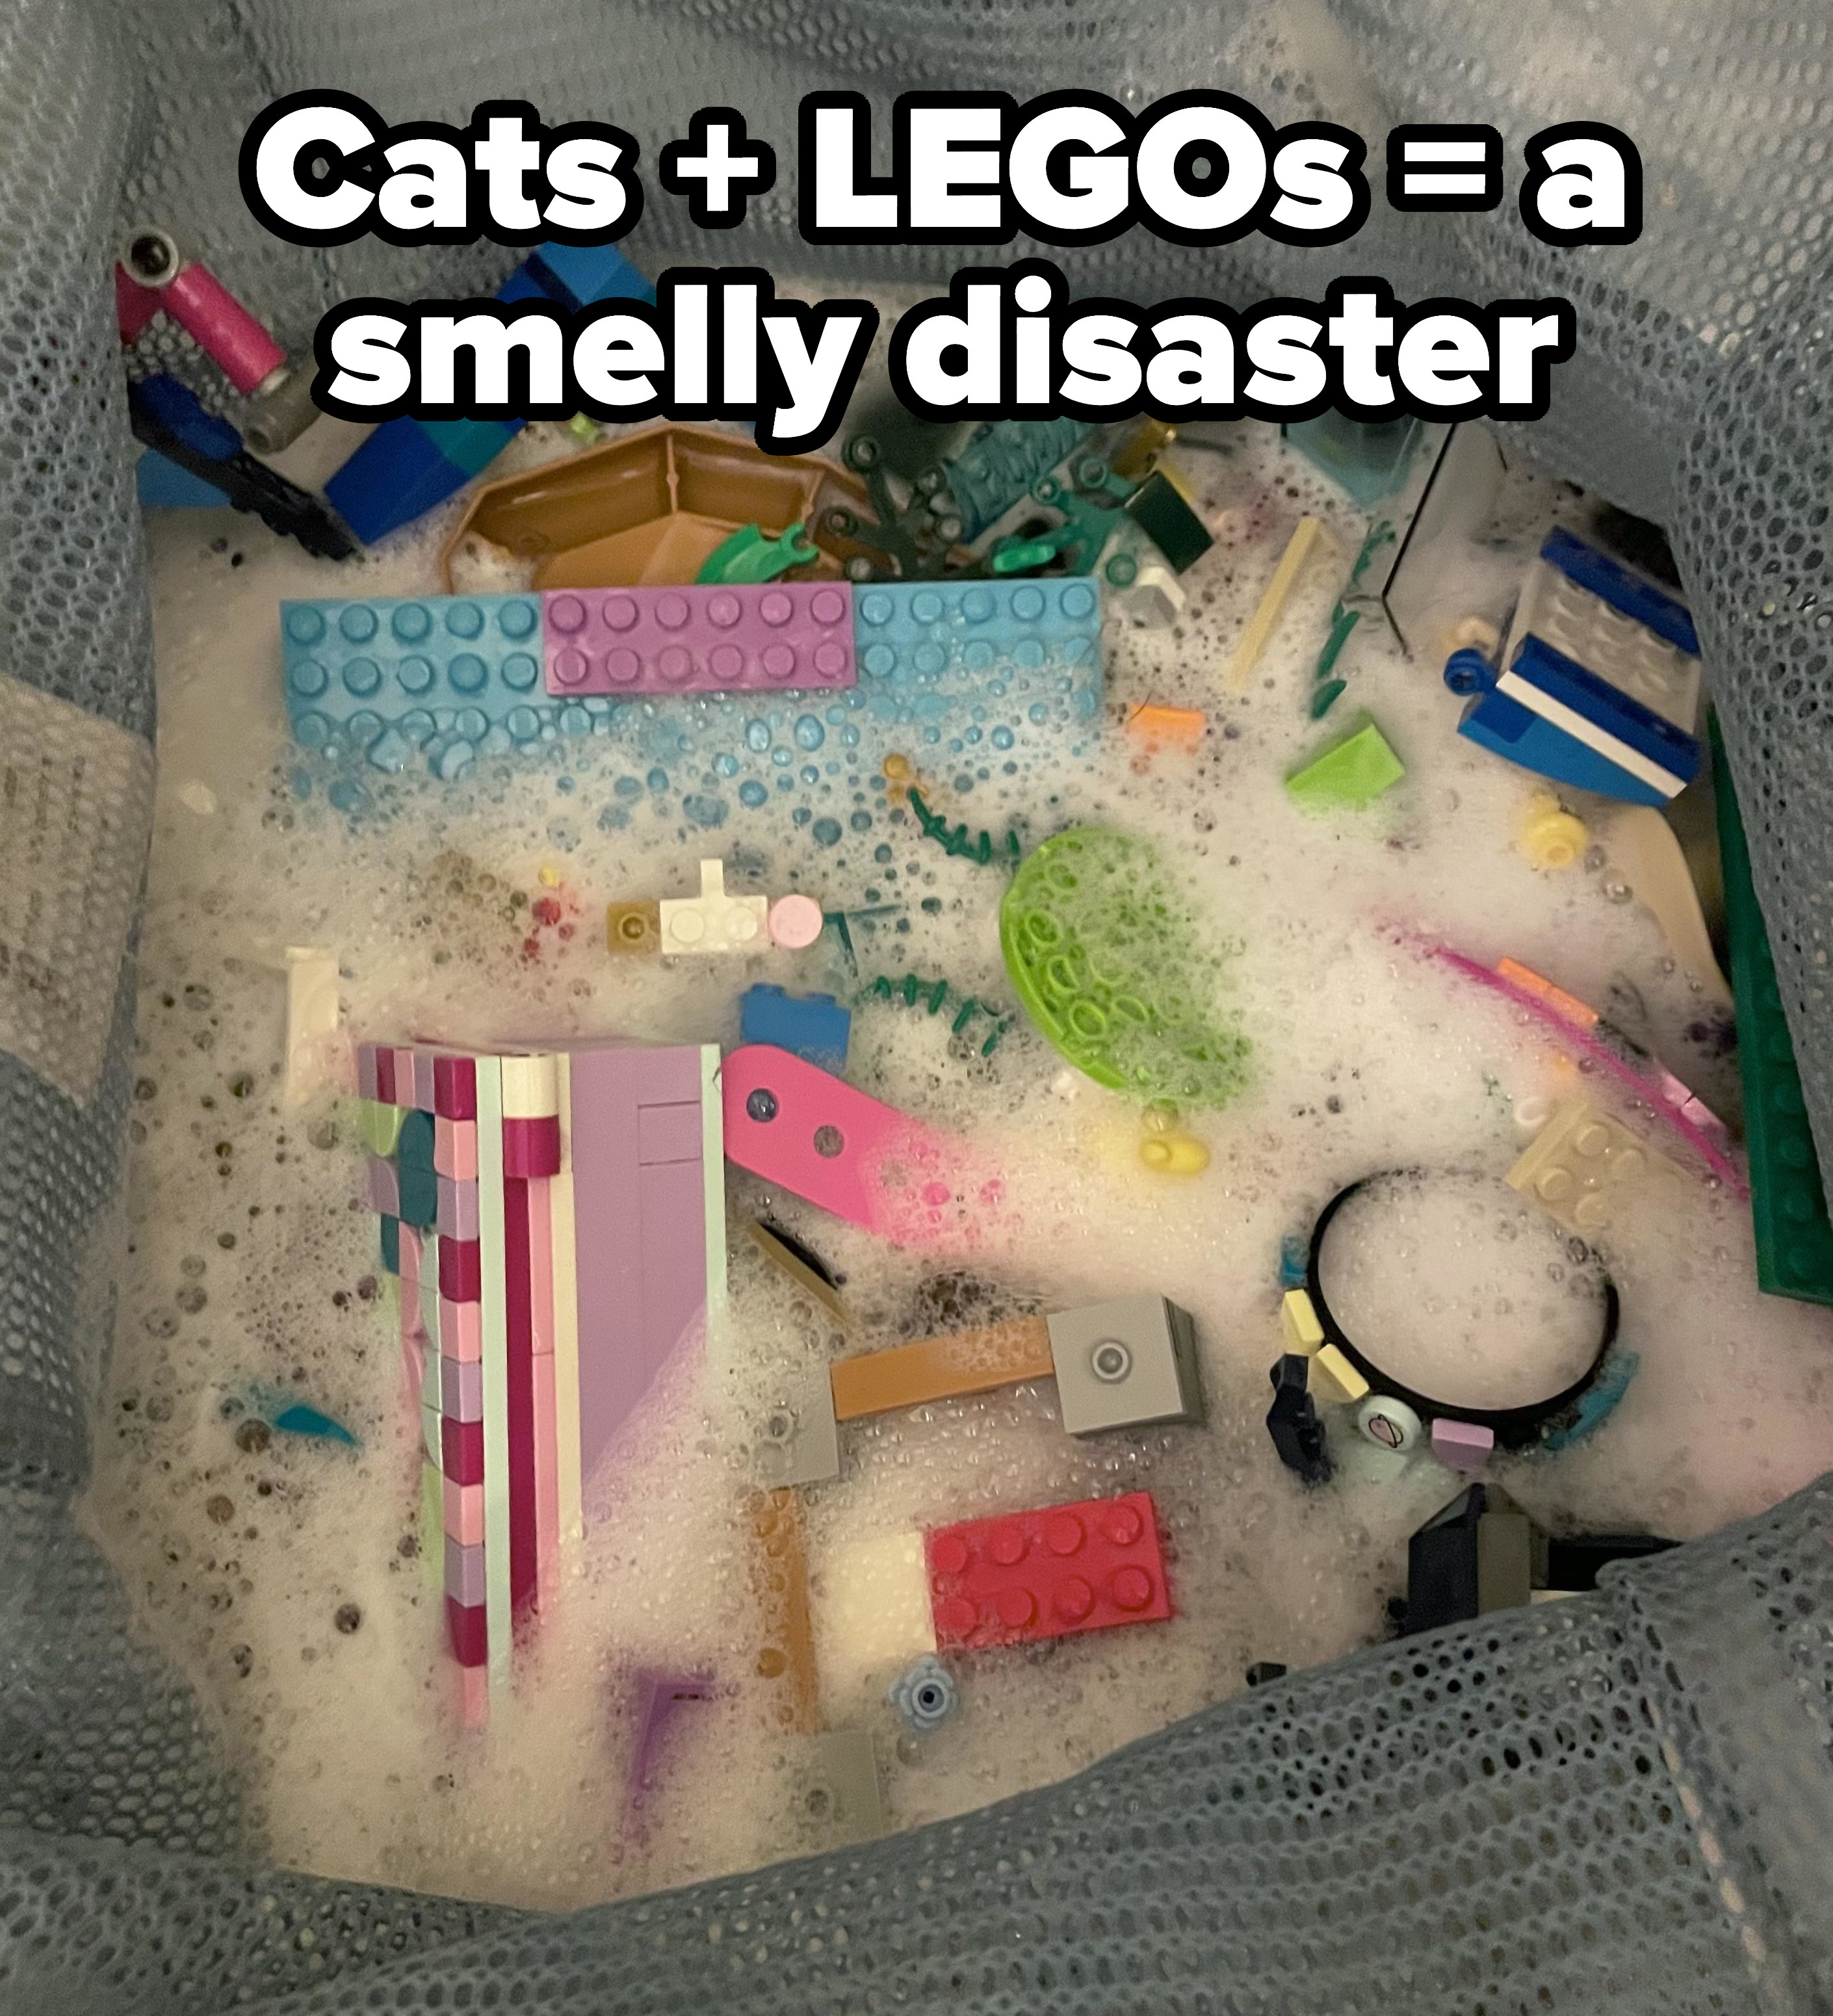 cat pee in a box of legos